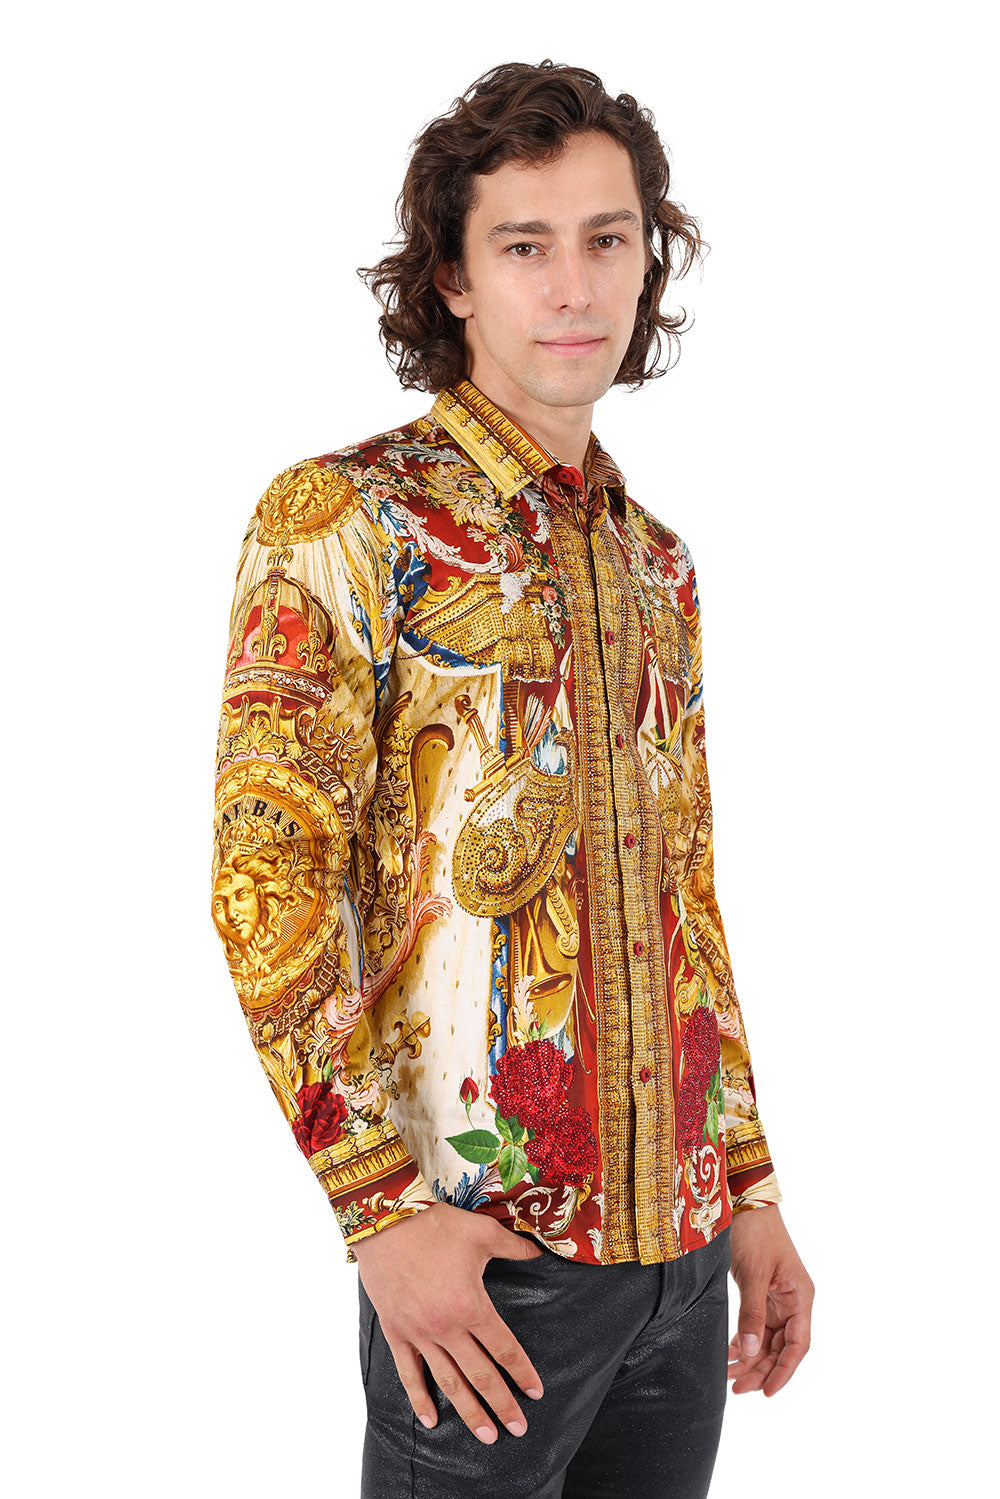 BARABAS Men's Rhinestone Medusa Floral Printed Baroque Shirt 2SPR222 Gold